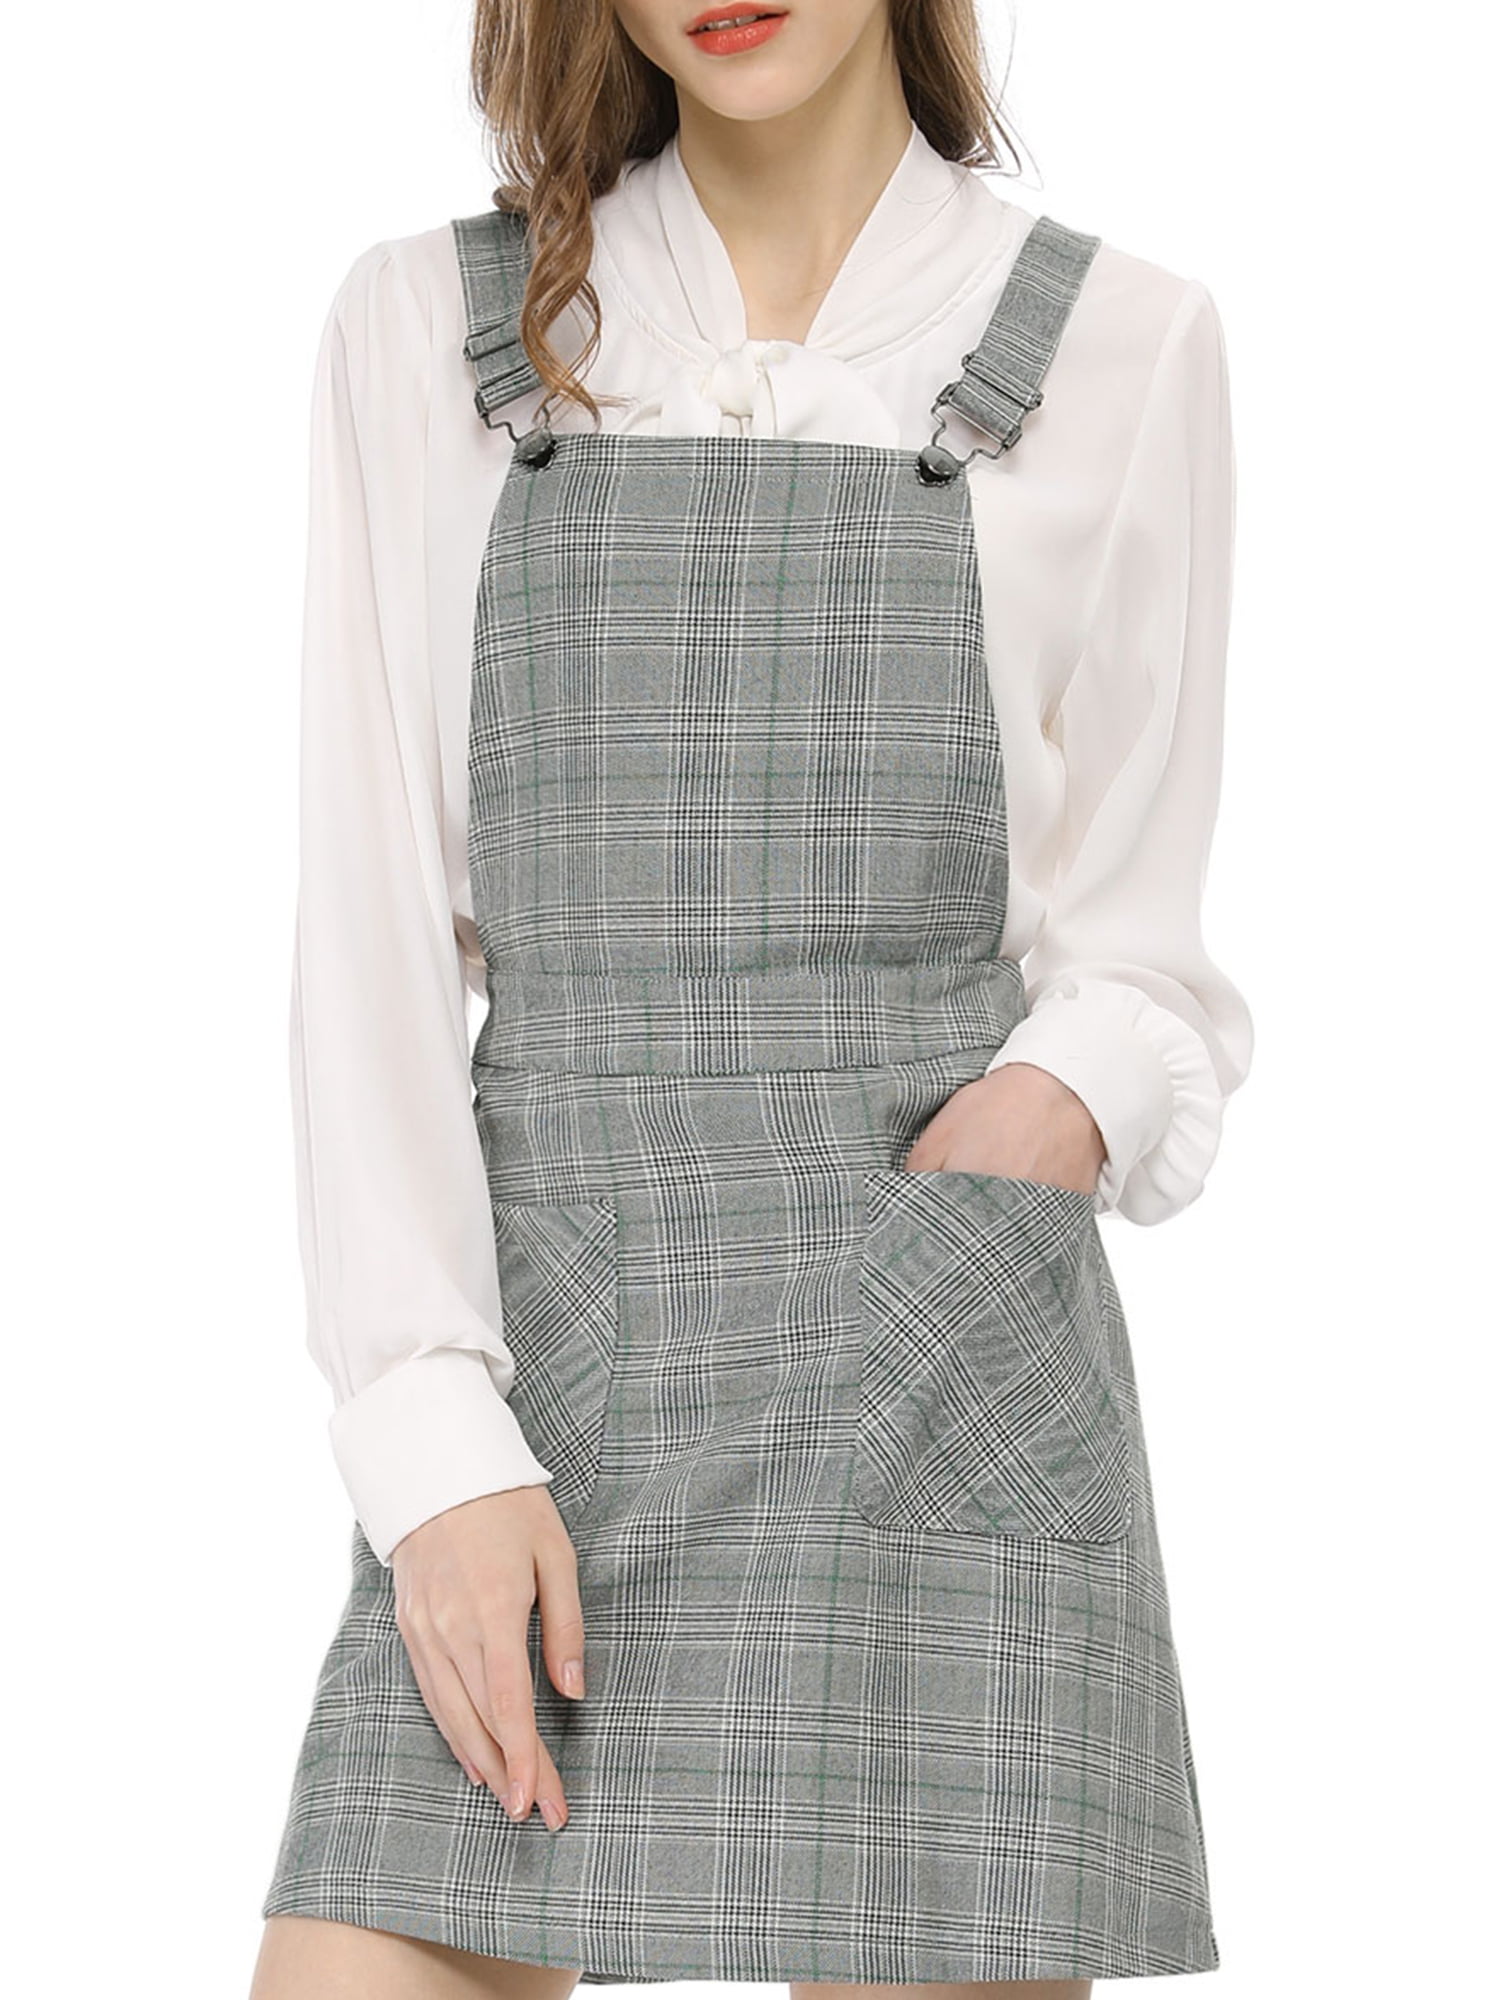 checkered overall skirt